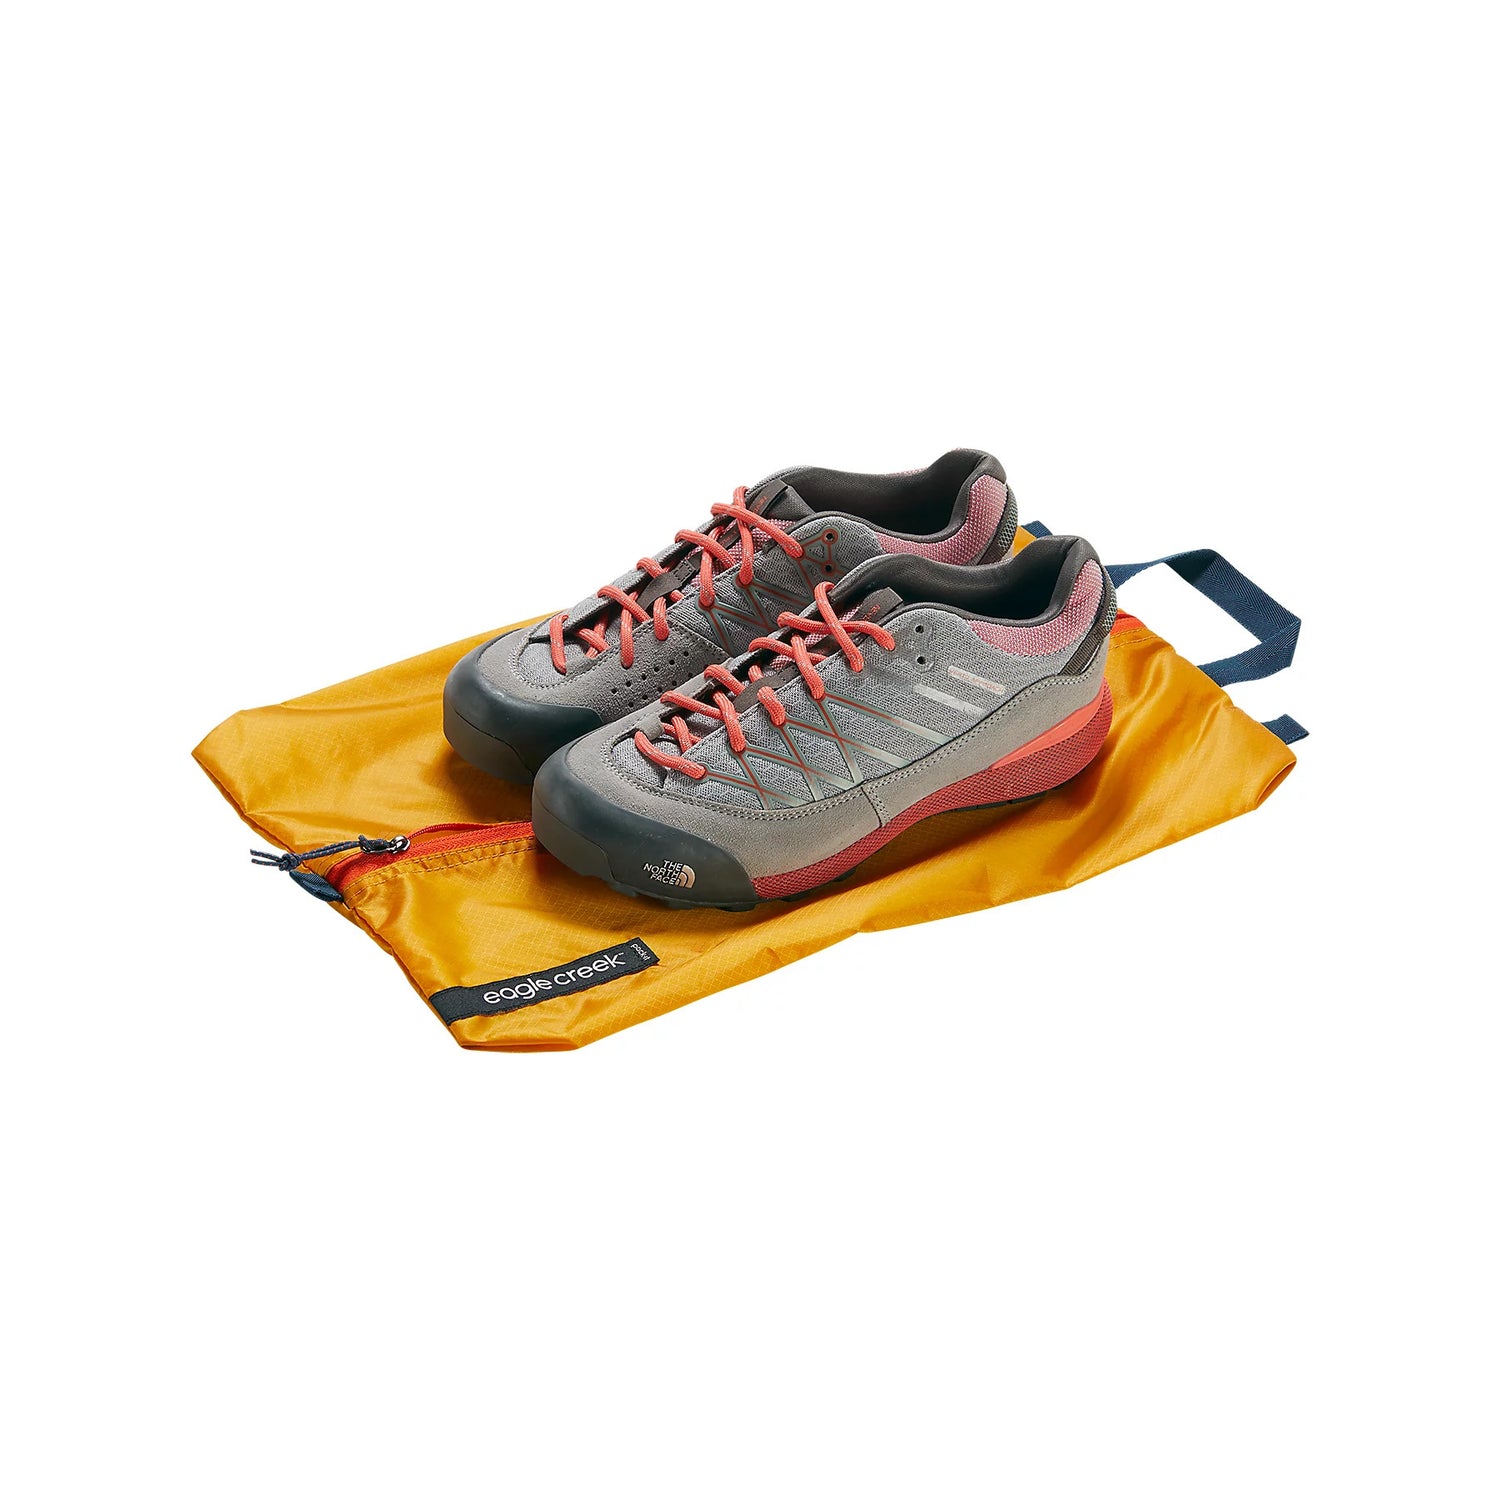 PACK-IT™ Isolate Shoe Sack - SAHARA YELLOW